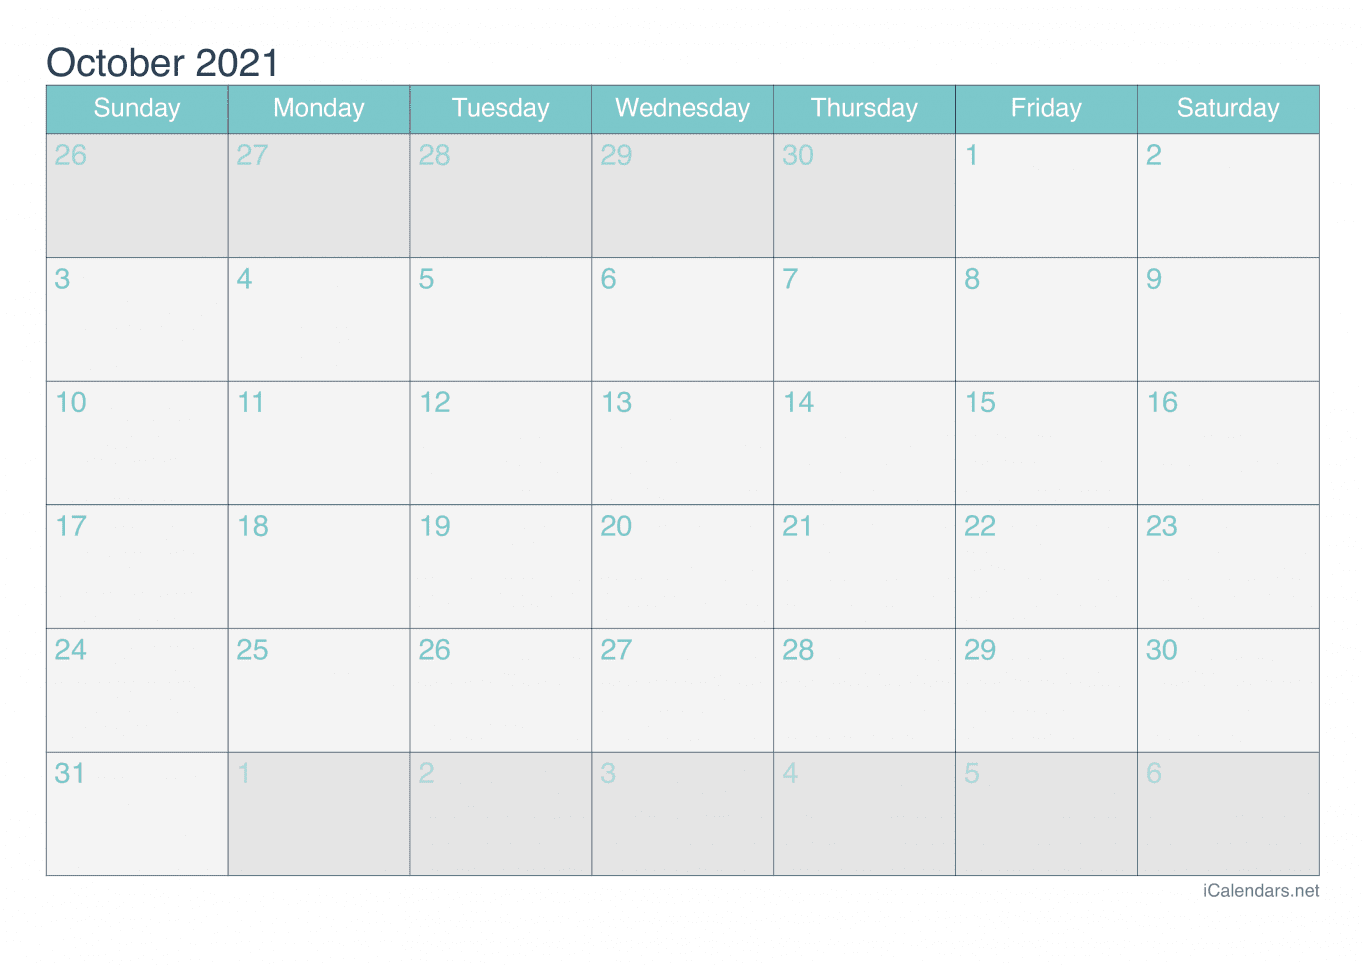 2021 October Calendar - Turquoise